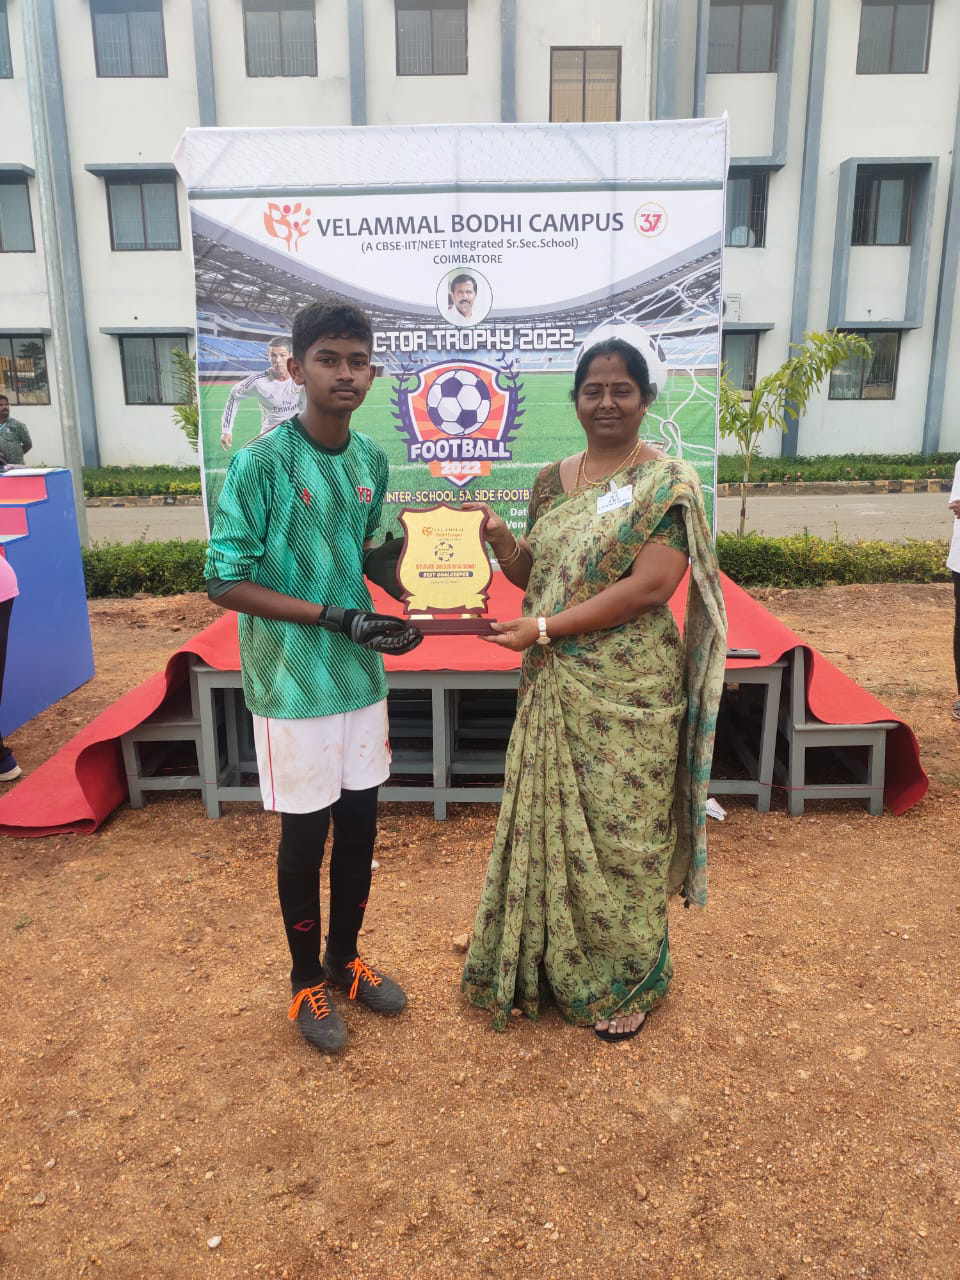 Mithun Senddur V. of Yuvabharathi Public School bagged the Director Trophy's Best Goalkeeper award | Best CBSE School in Tamilnadu